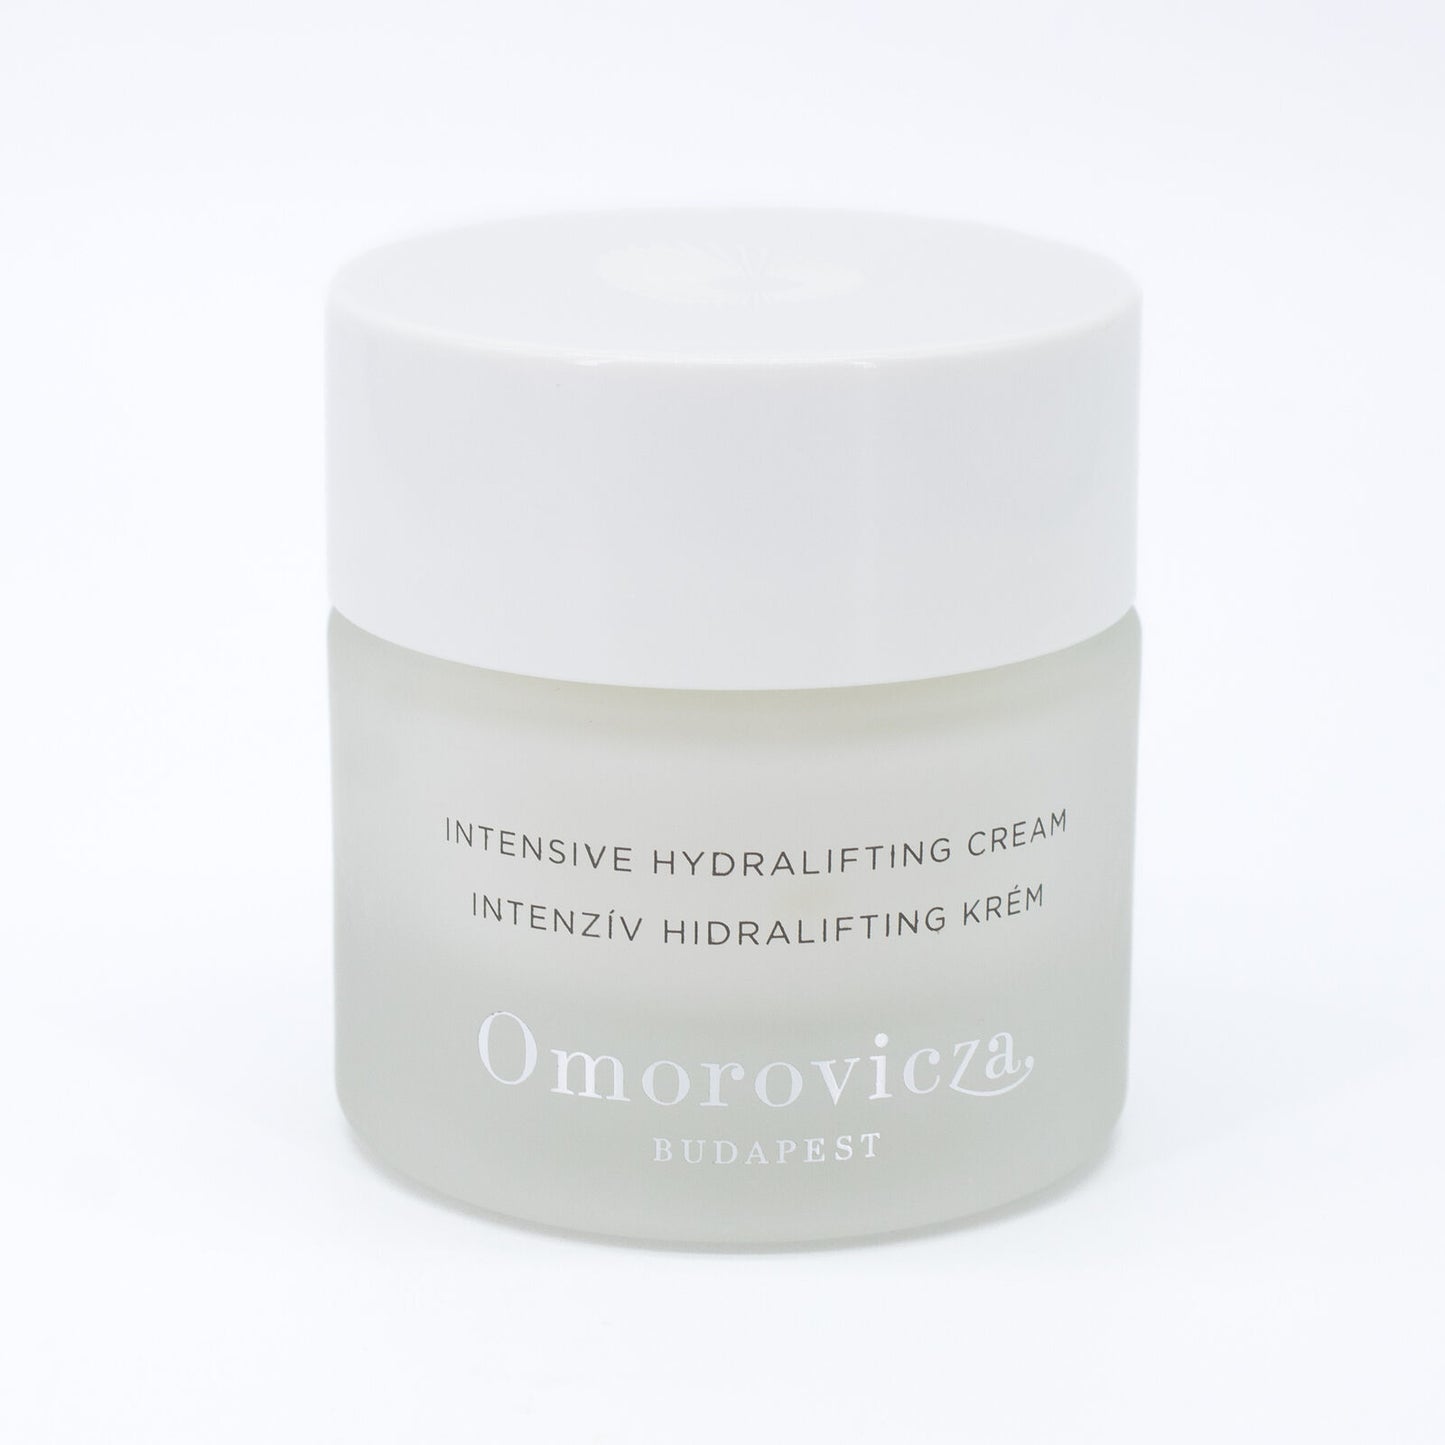 Omorovicza Intensive Hydra-lifting Cream 1.7oz - Imperfect Box